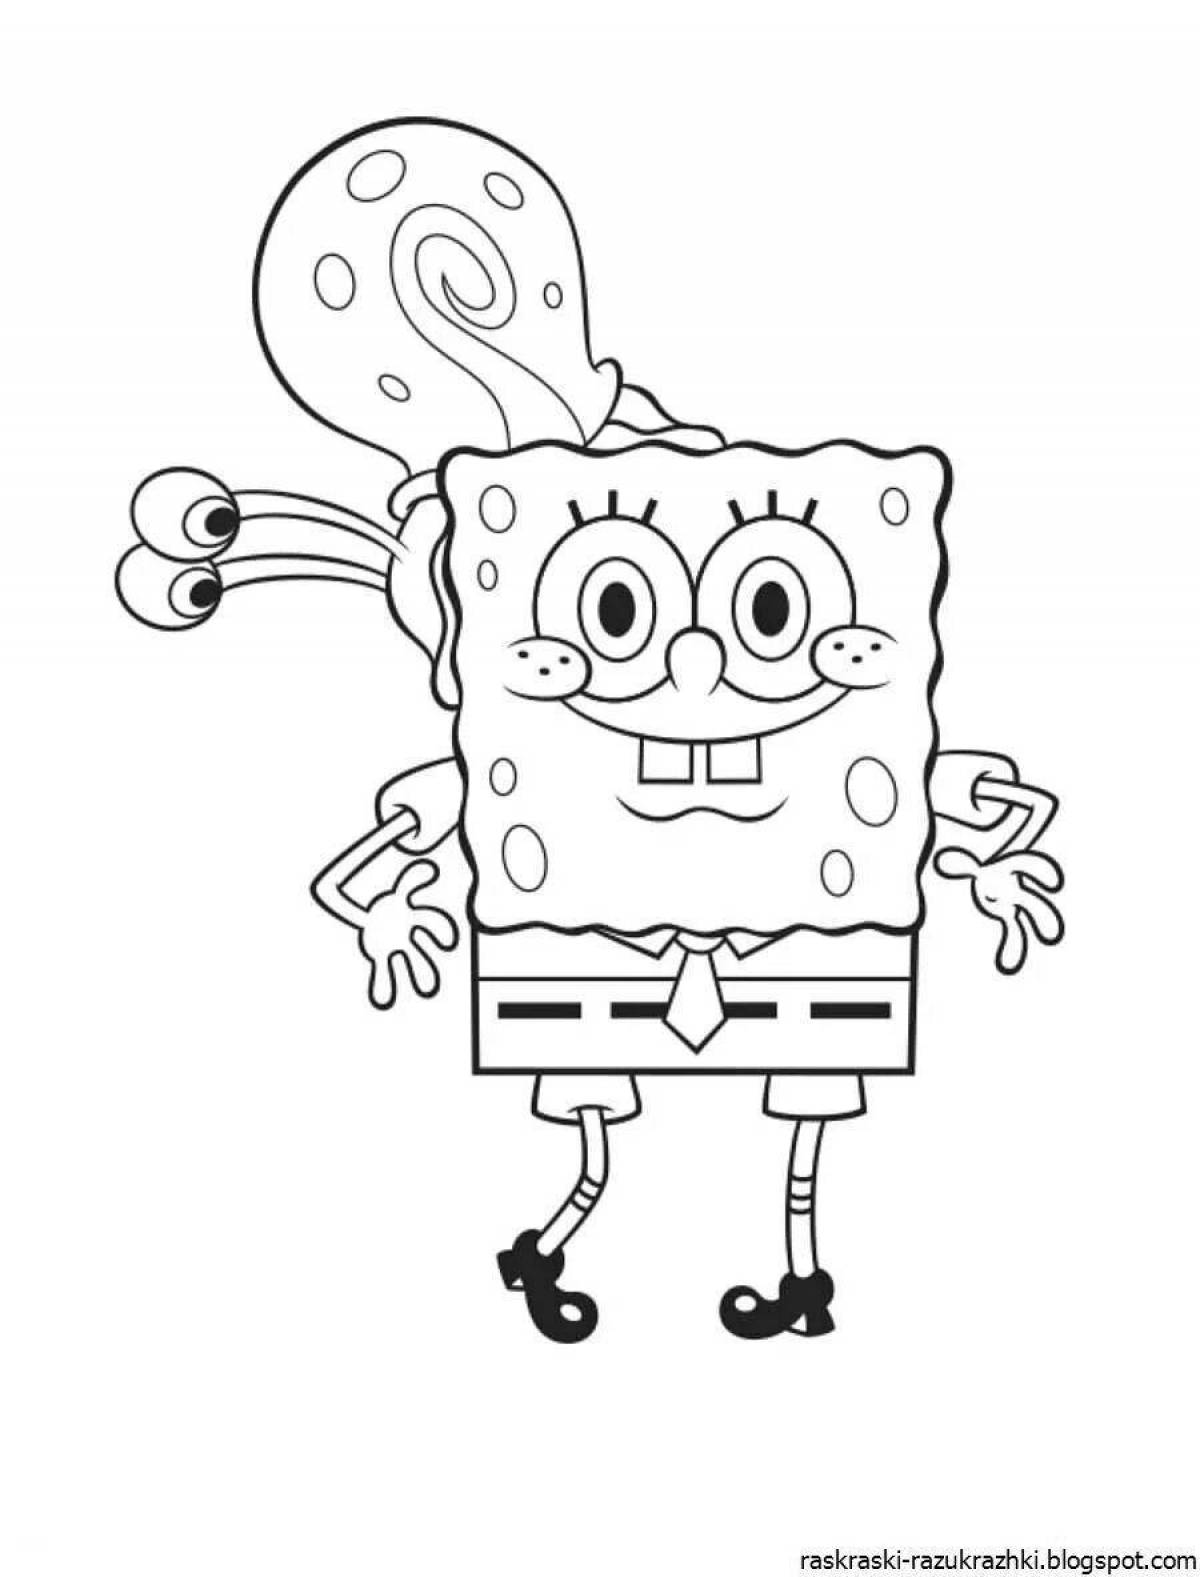 Joyful coloring spongebob for kids